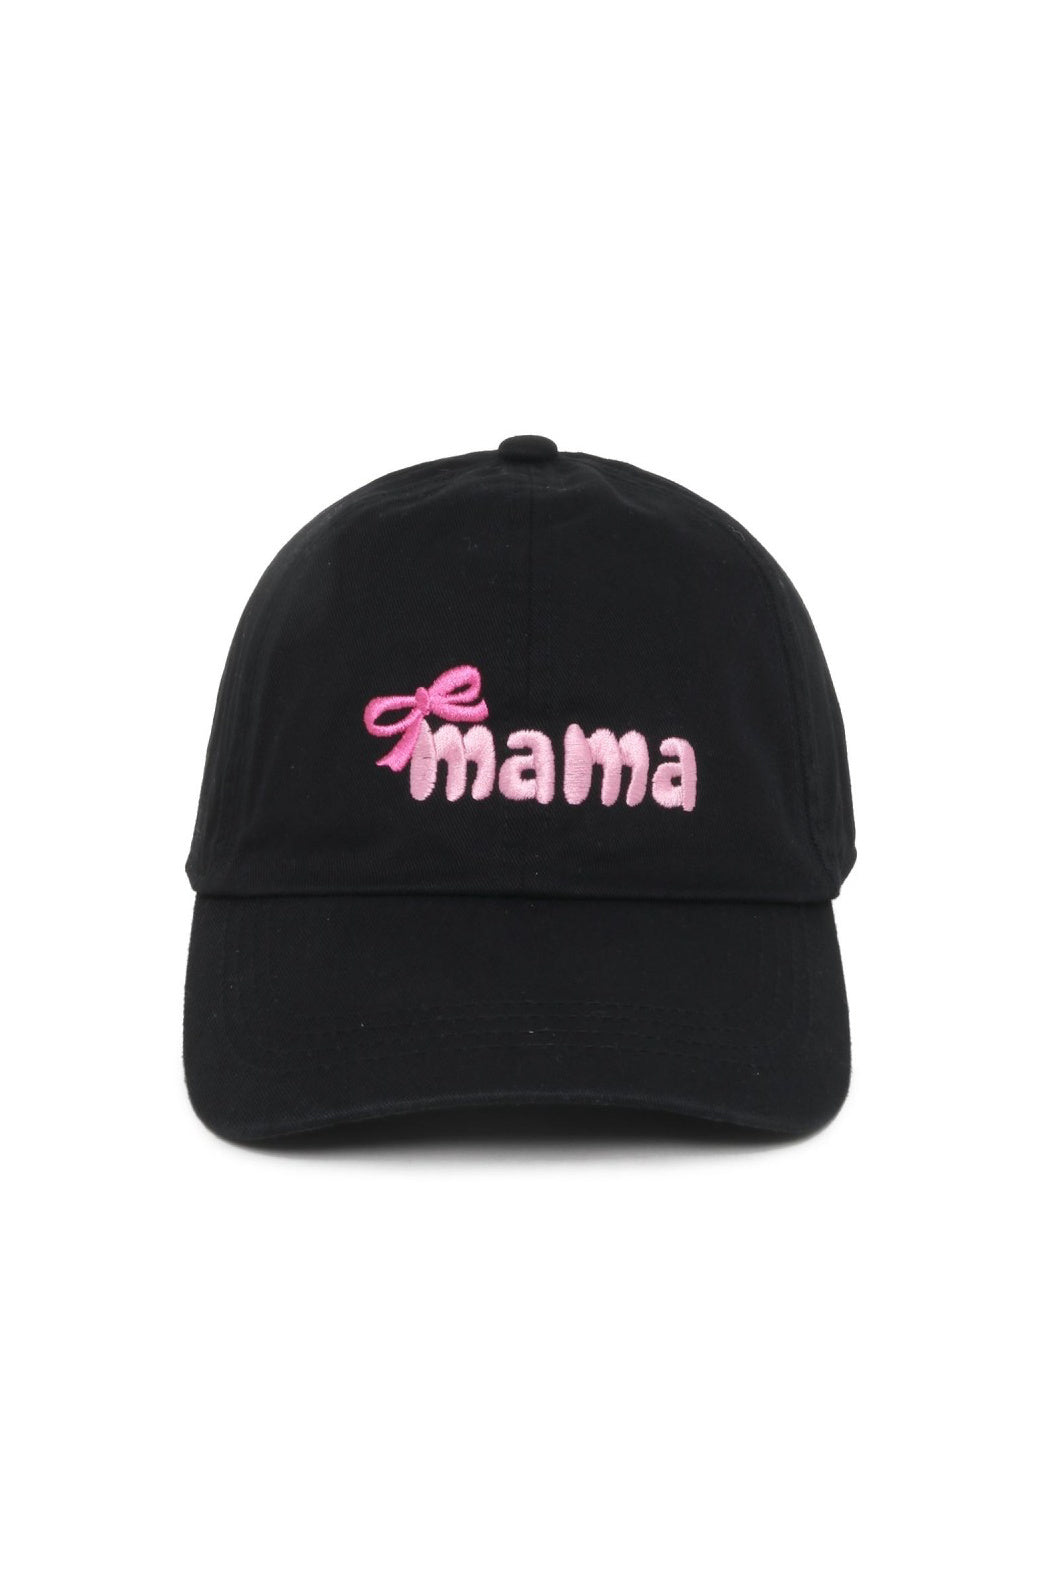 Mama Bow Cap